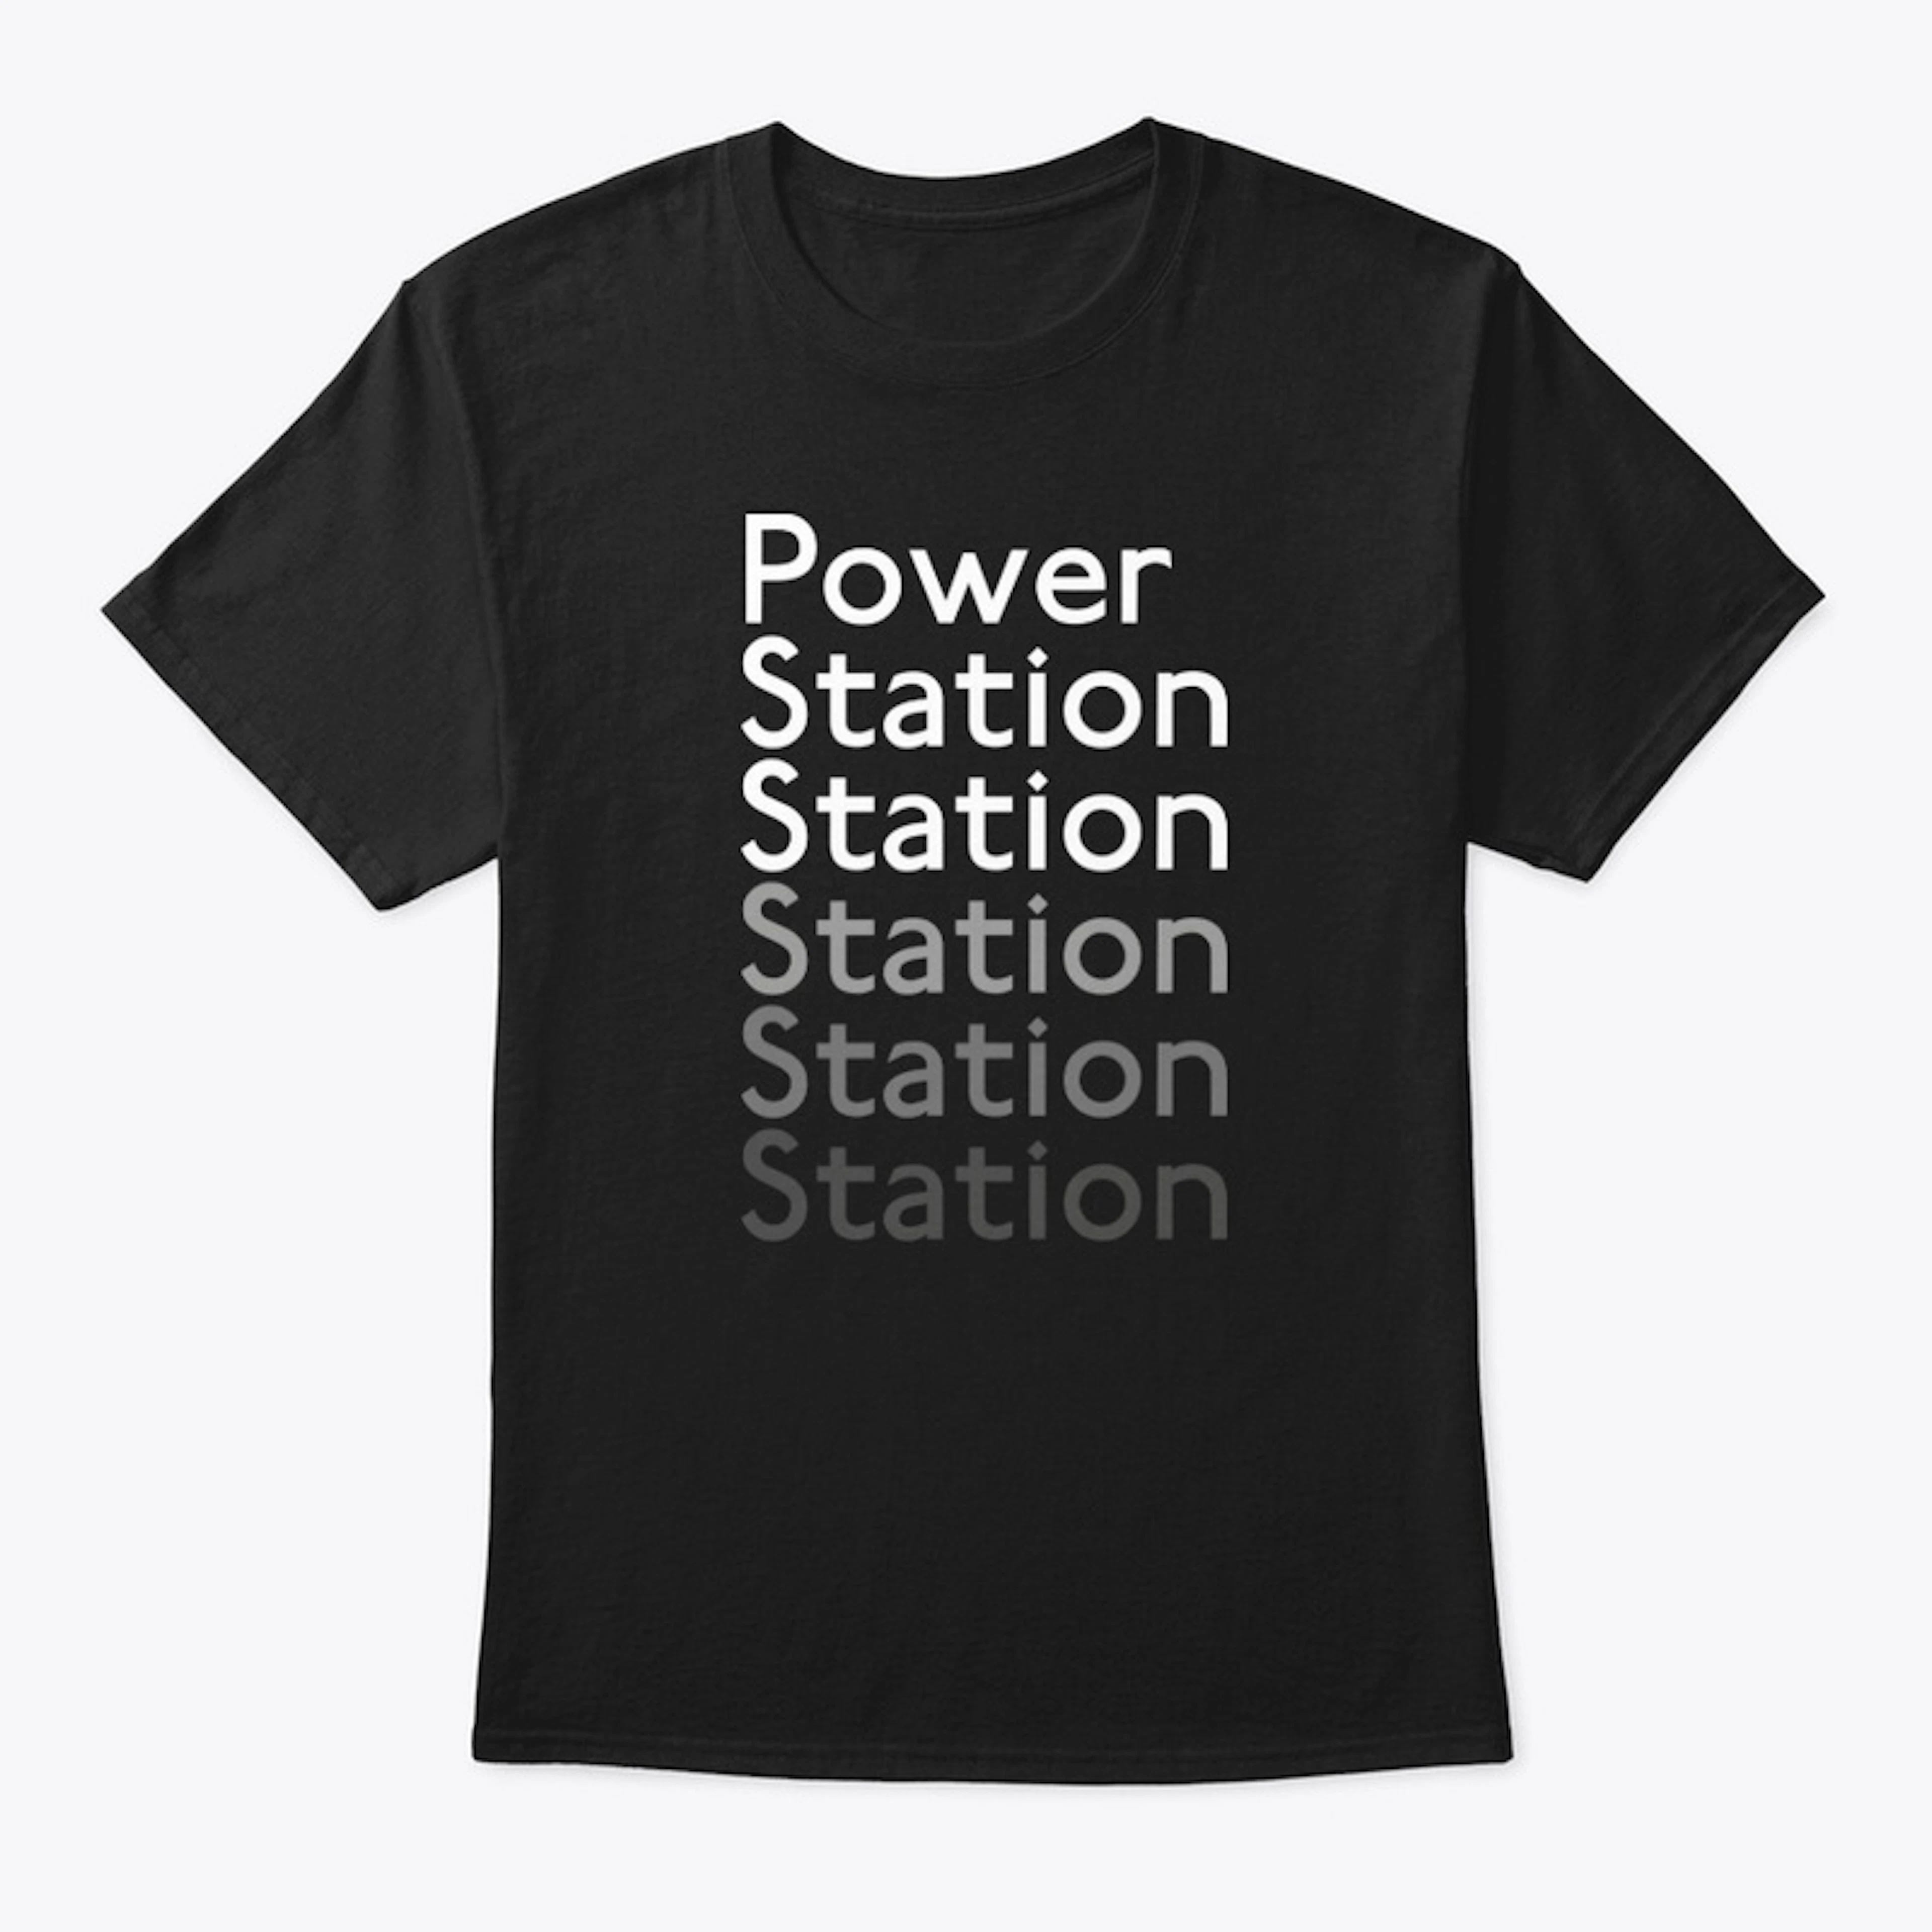 Power Station Station